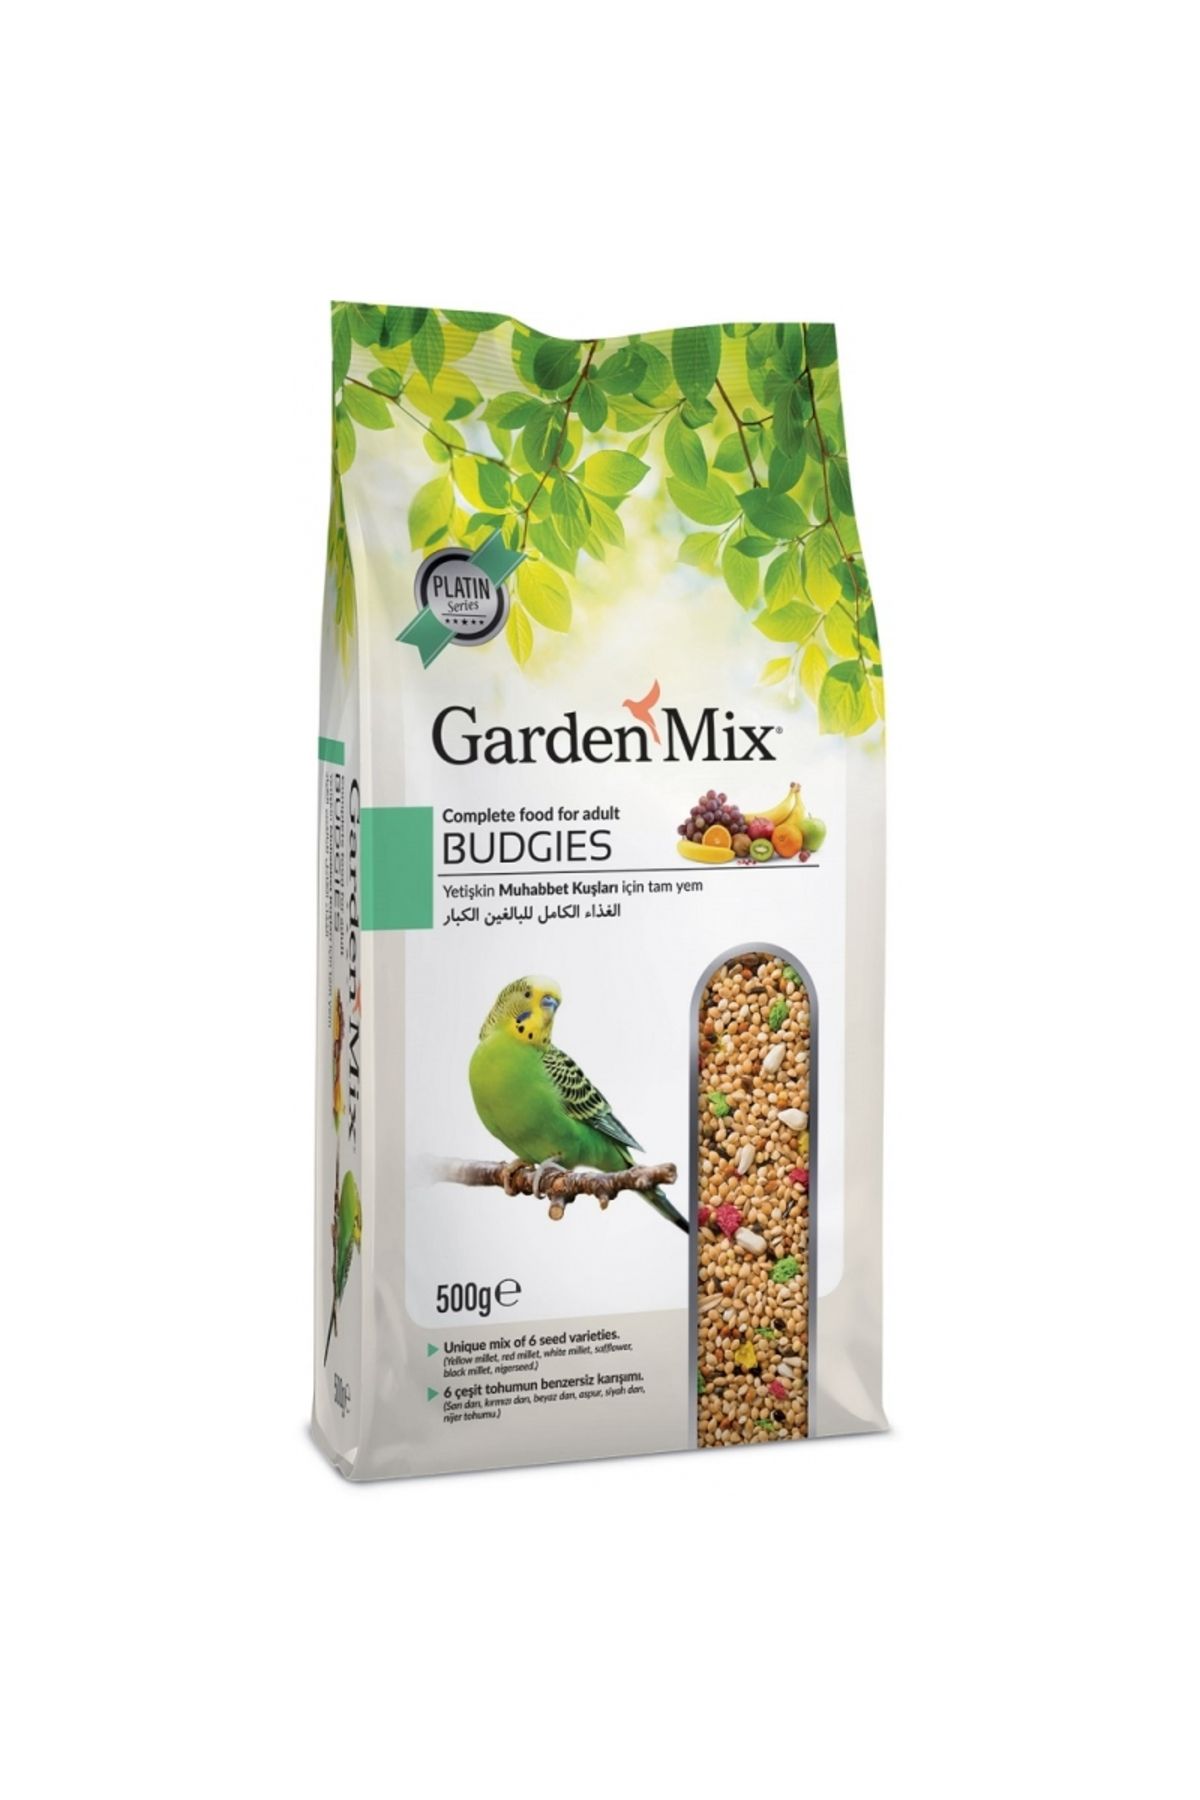 Petgarden Garden mix - Platin Meyveli Muhabbet Kuş Yemi